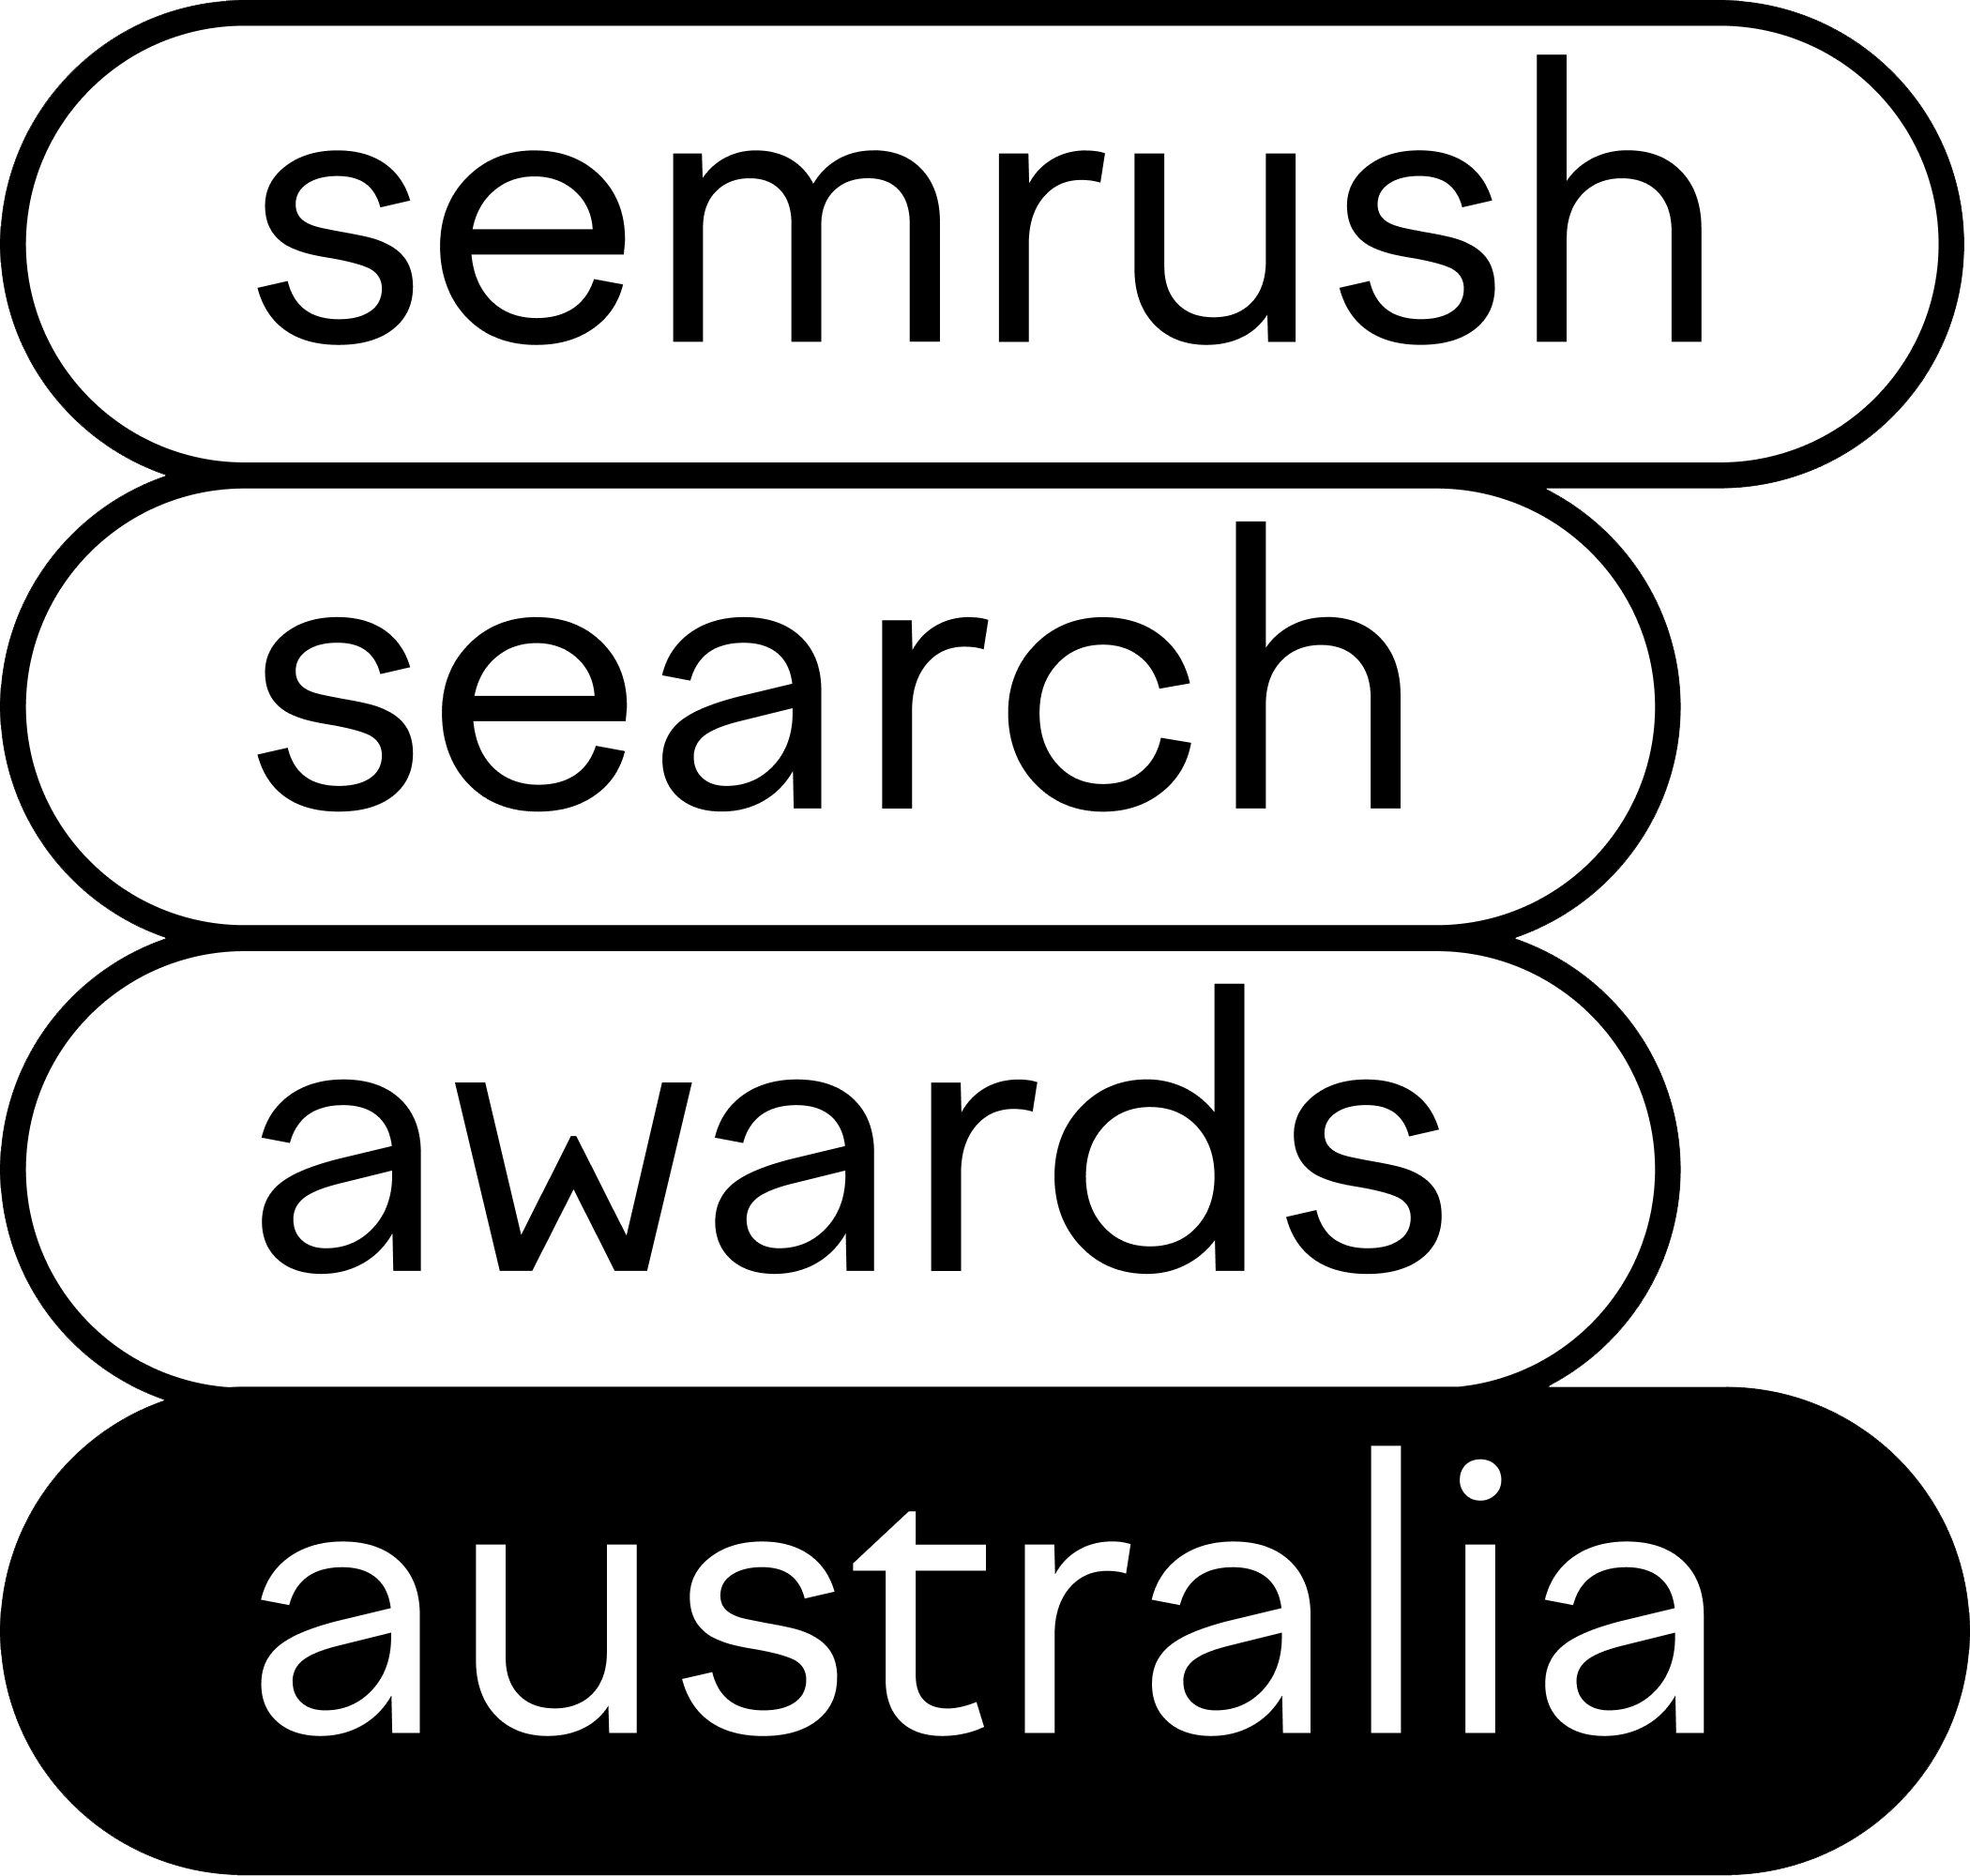 Semrush AU Search Awards logo